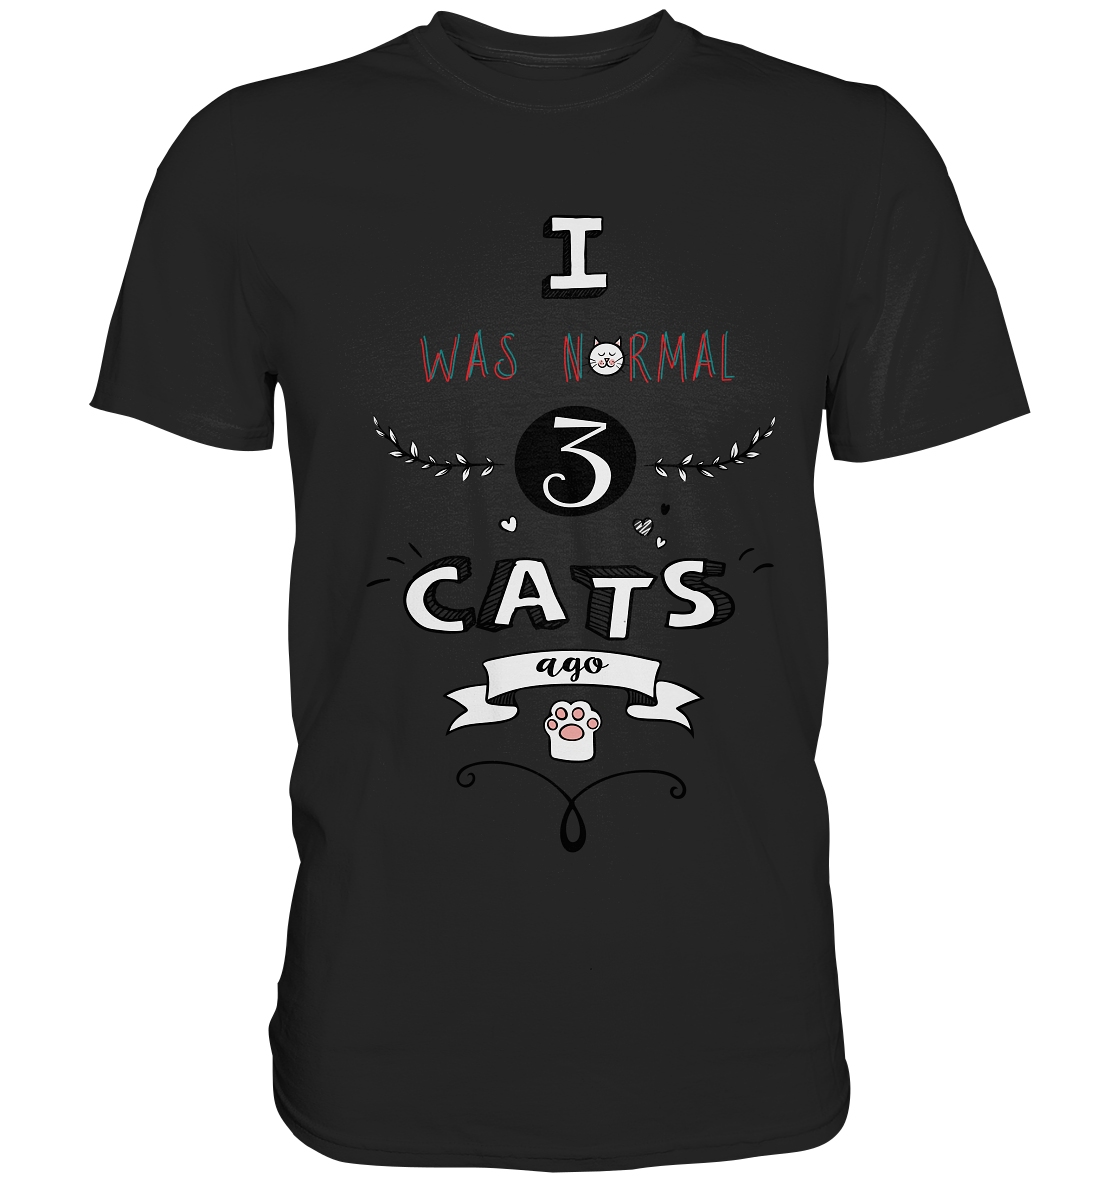 I was normal 3 cats ago. Katzen - Unisex Premium Shirt